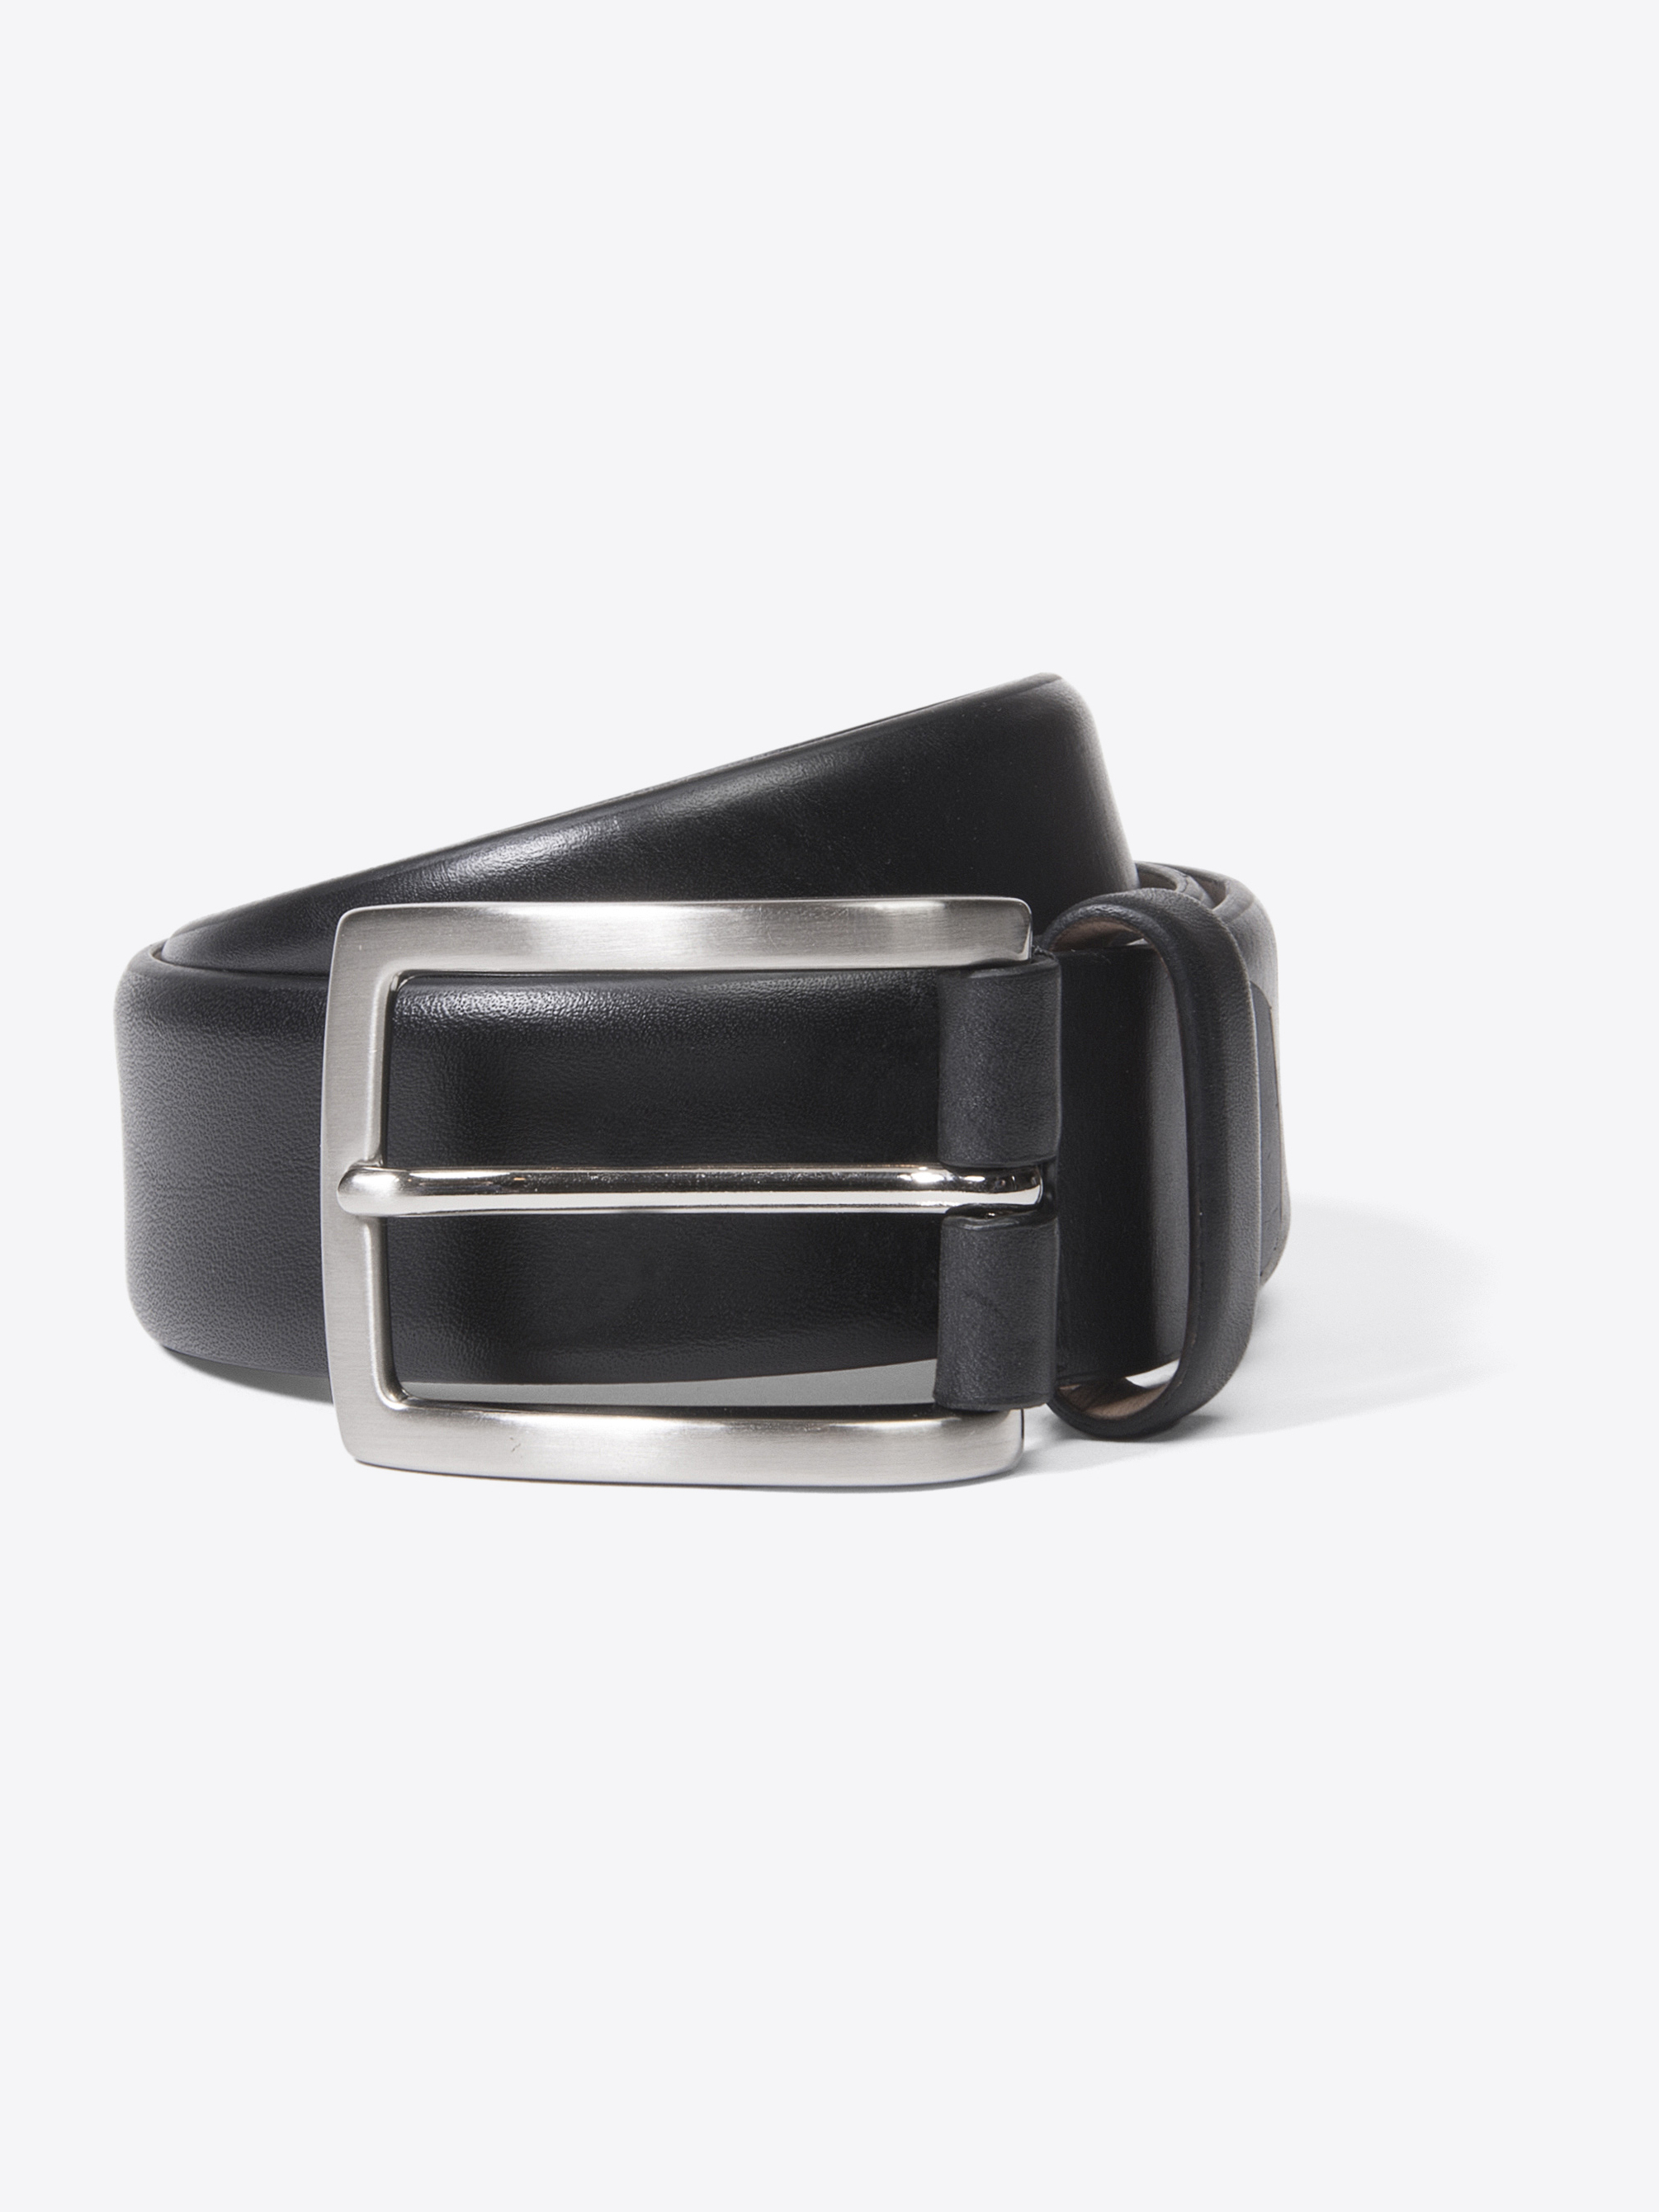 Zoom Image of Black Vachetta Leather Belt